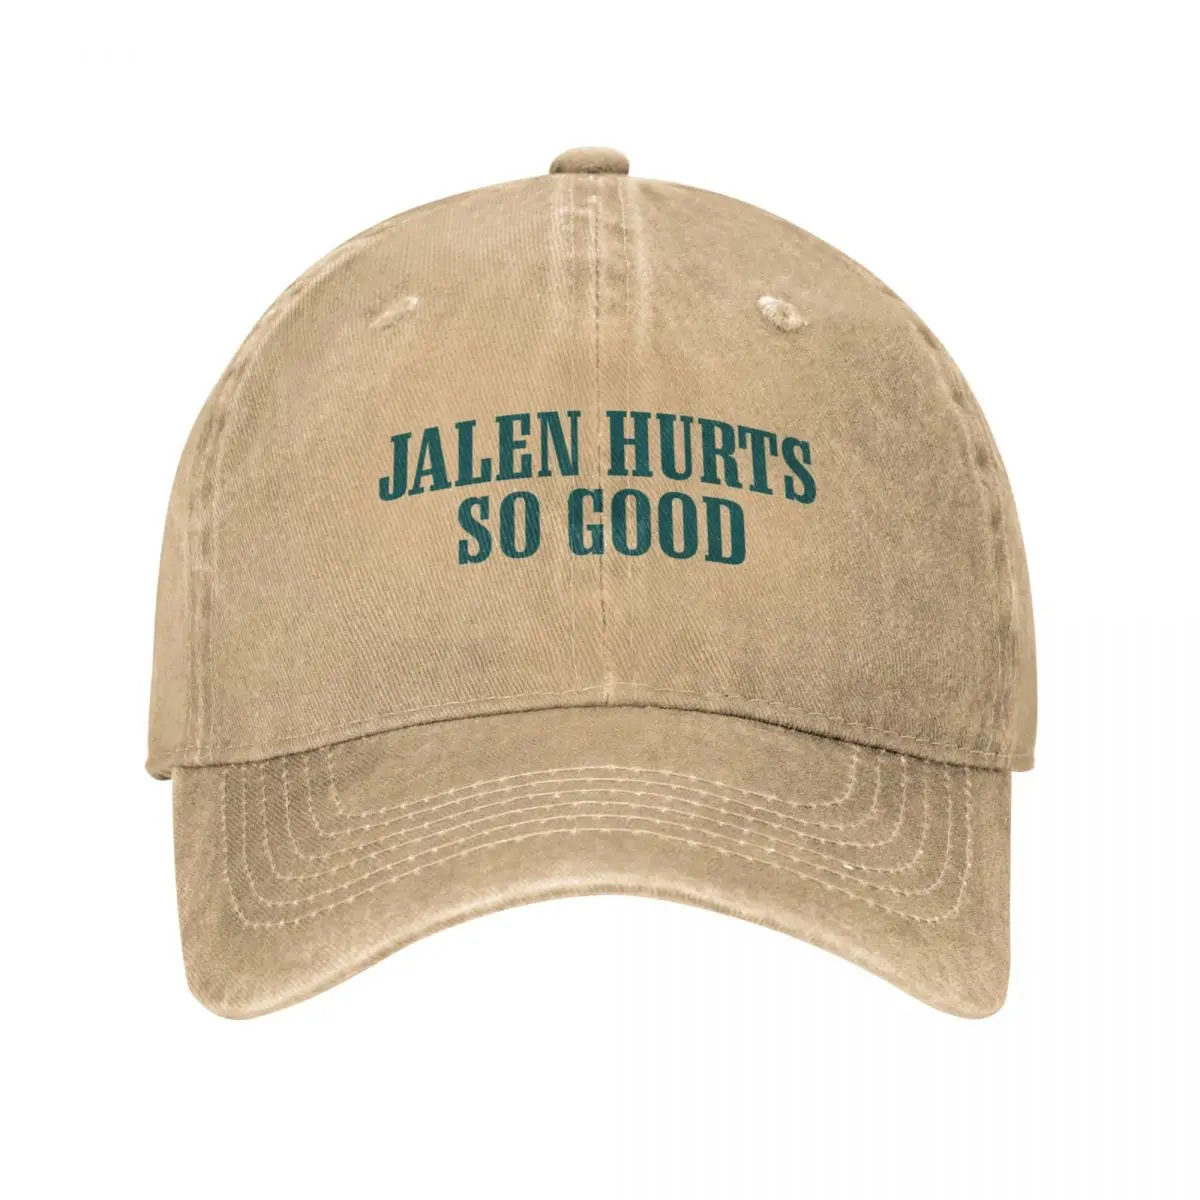 

Jalen Hurts So Good Cap Cowboy Hat Caps Big size hat Fashion beach luxury brand women's beach visor Men's